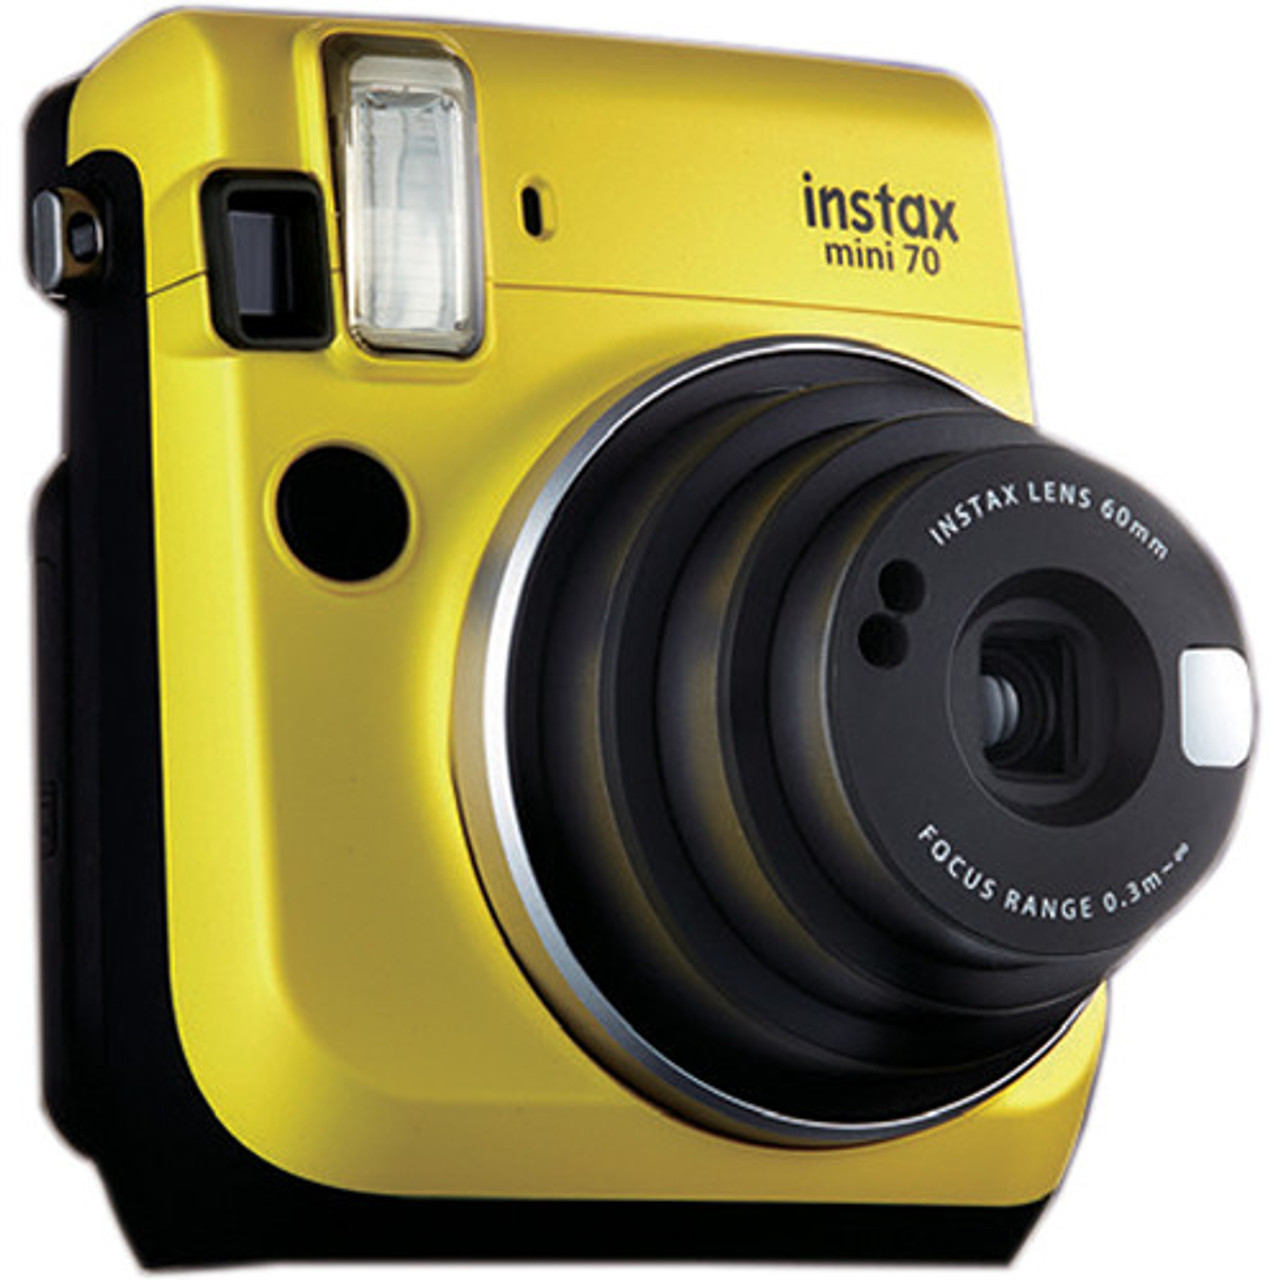 Fujifilm instax mini 70 Instant Film Camera (Canary Yellow)